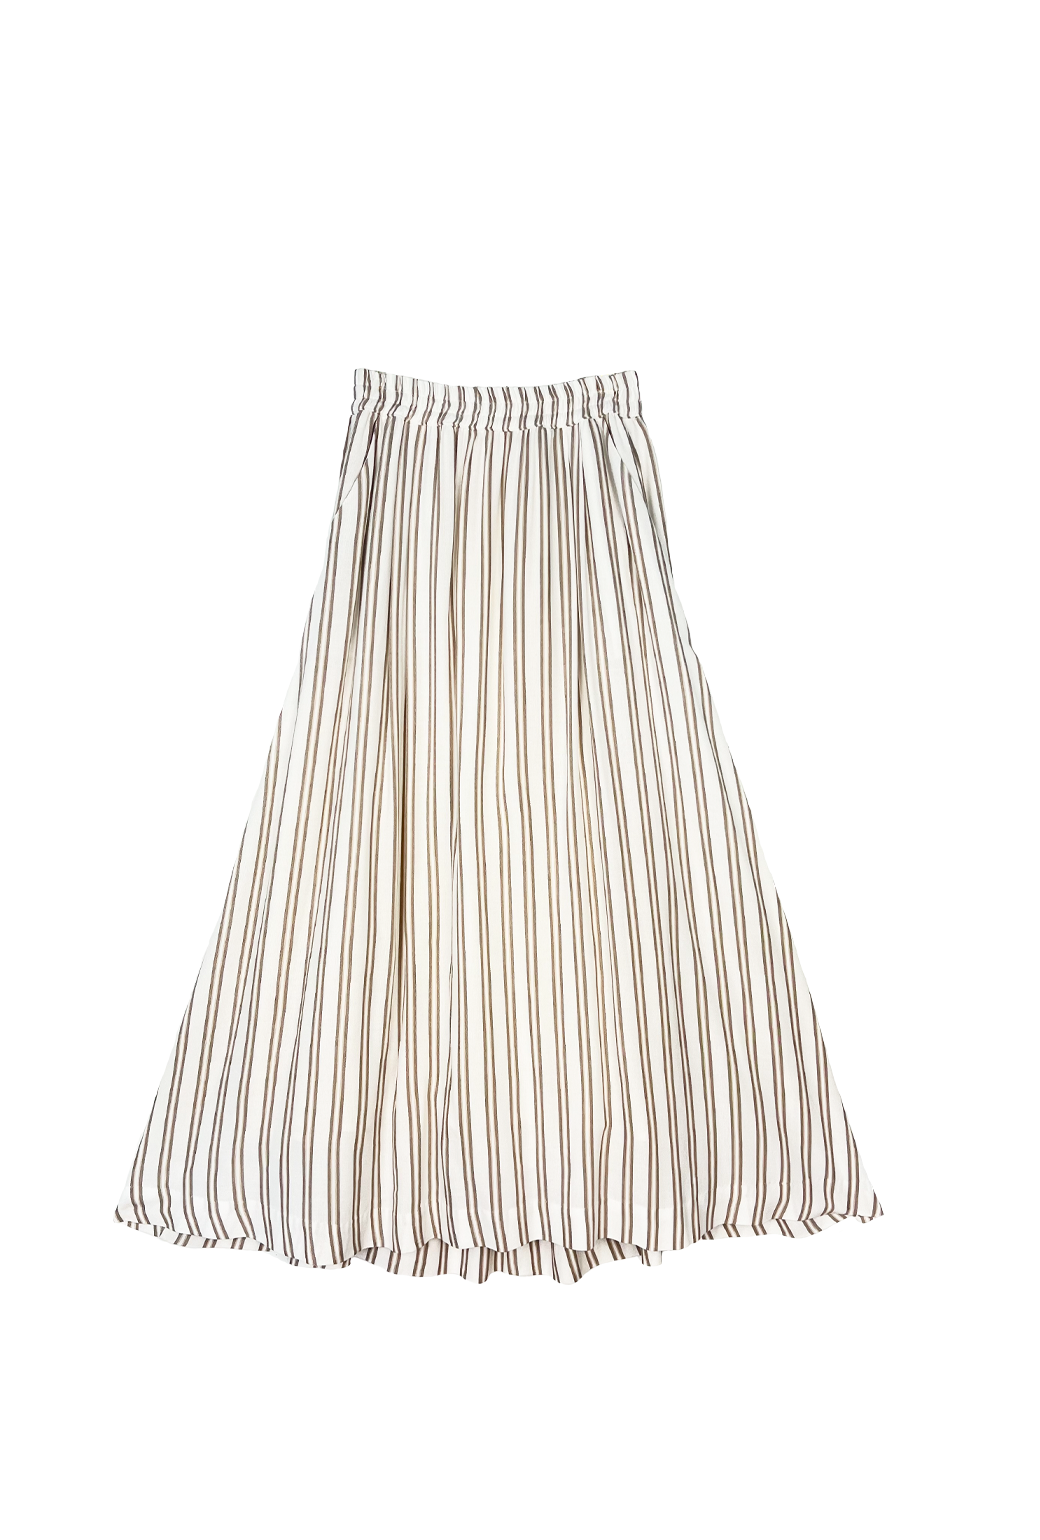 Buru x Jaimie Dewberry Everyday Maxi Skirt  - Taupe Stripe